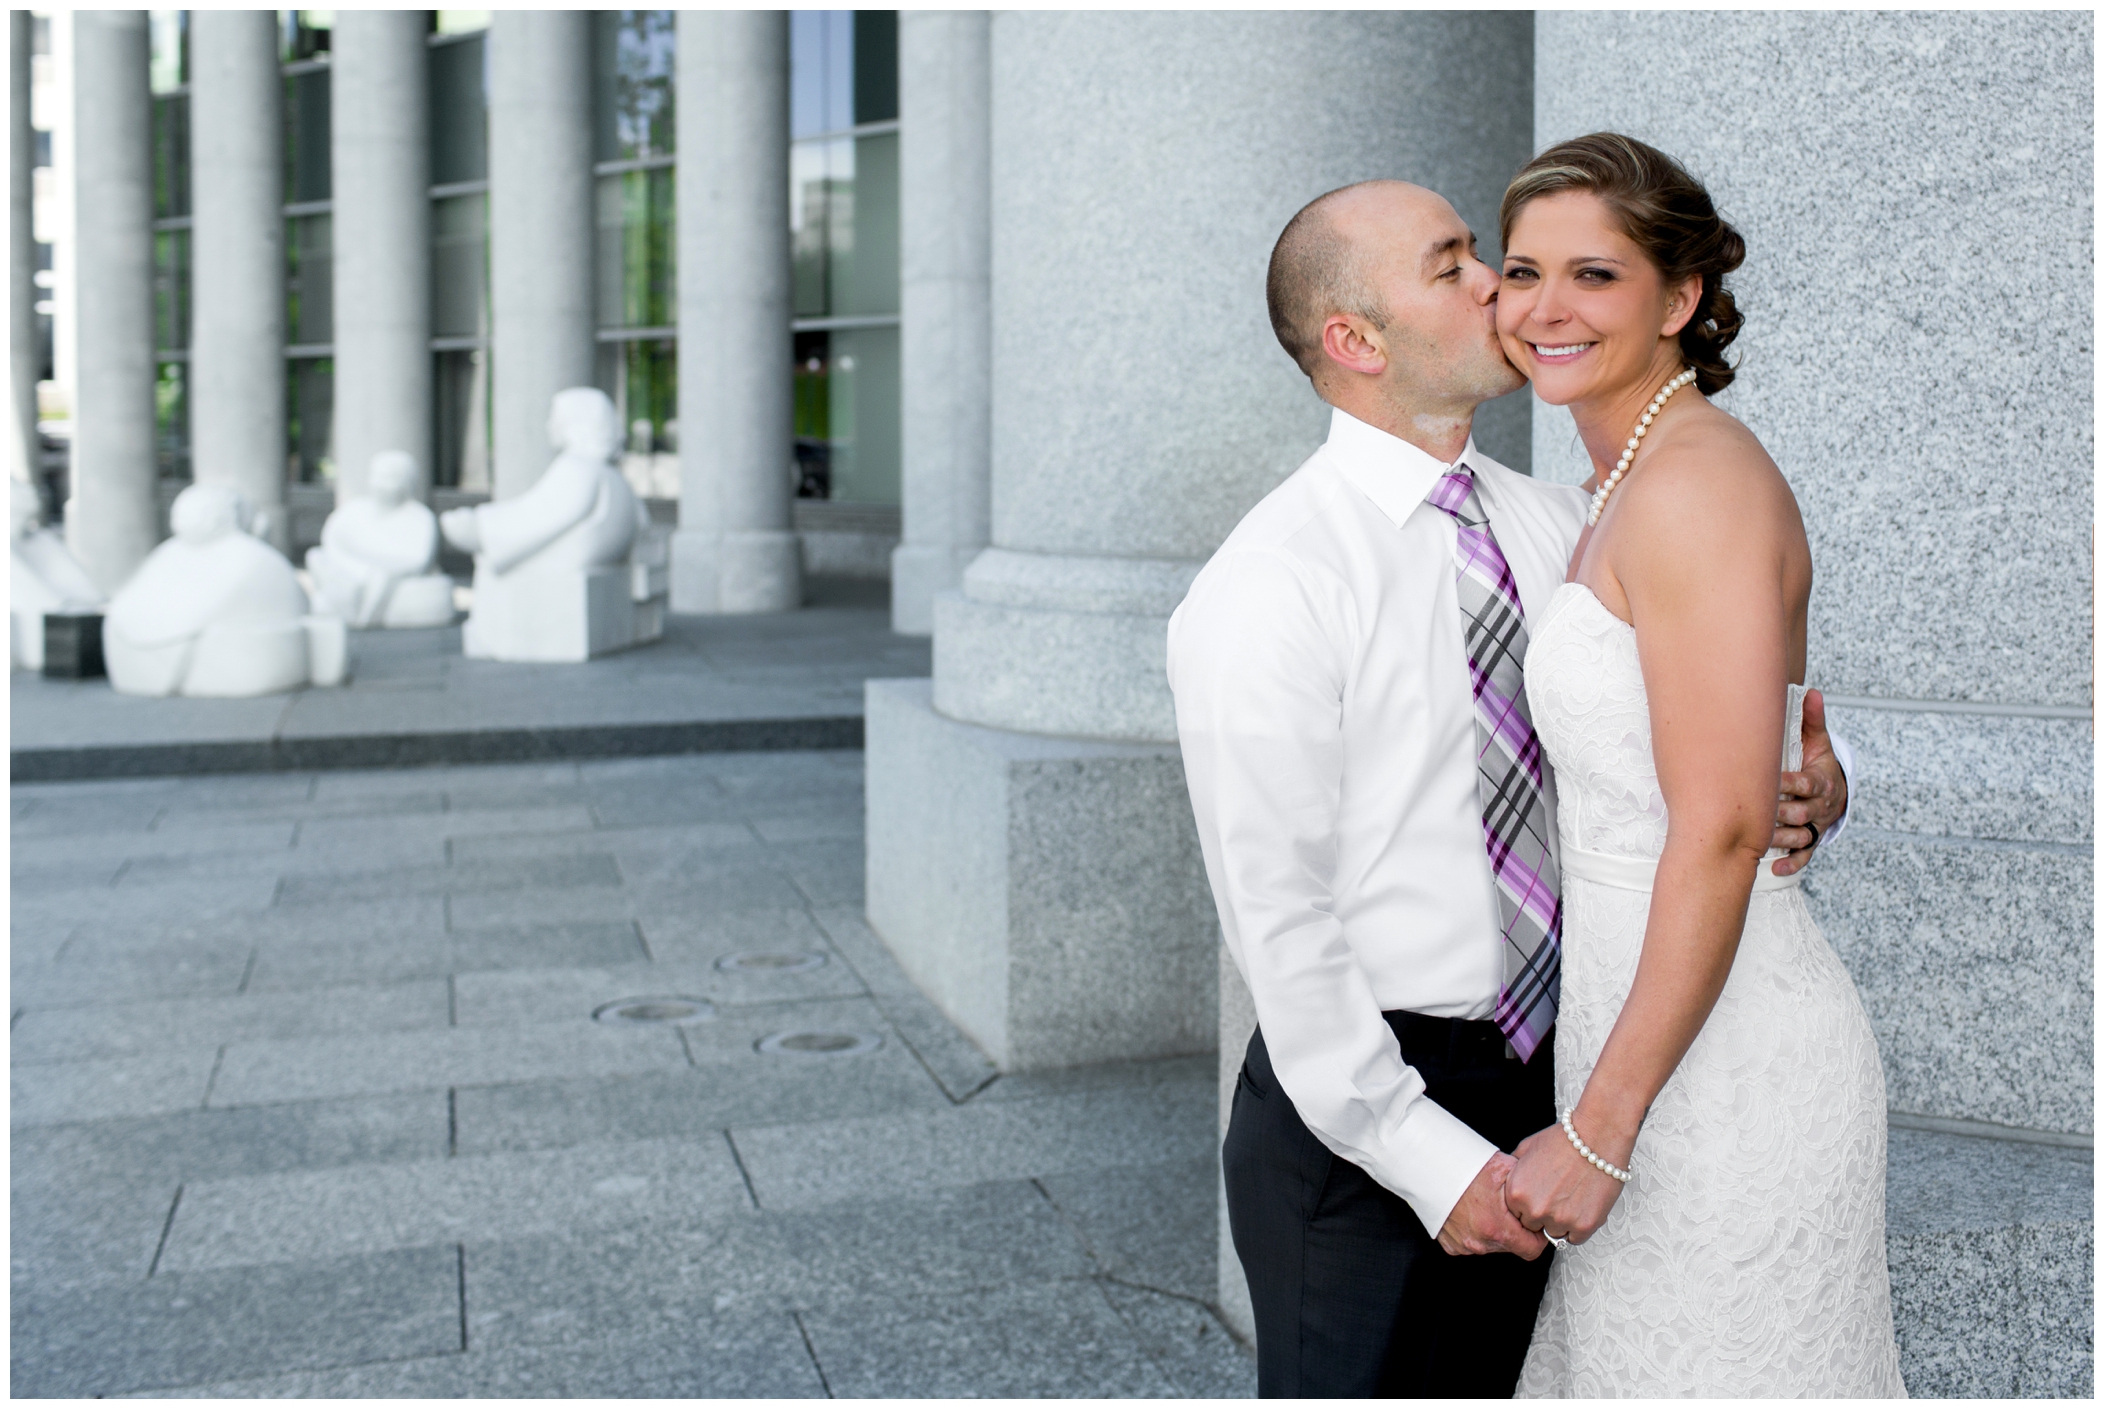 Denver elopement photos by Colorado wedding photographer Plum Pretty Photography